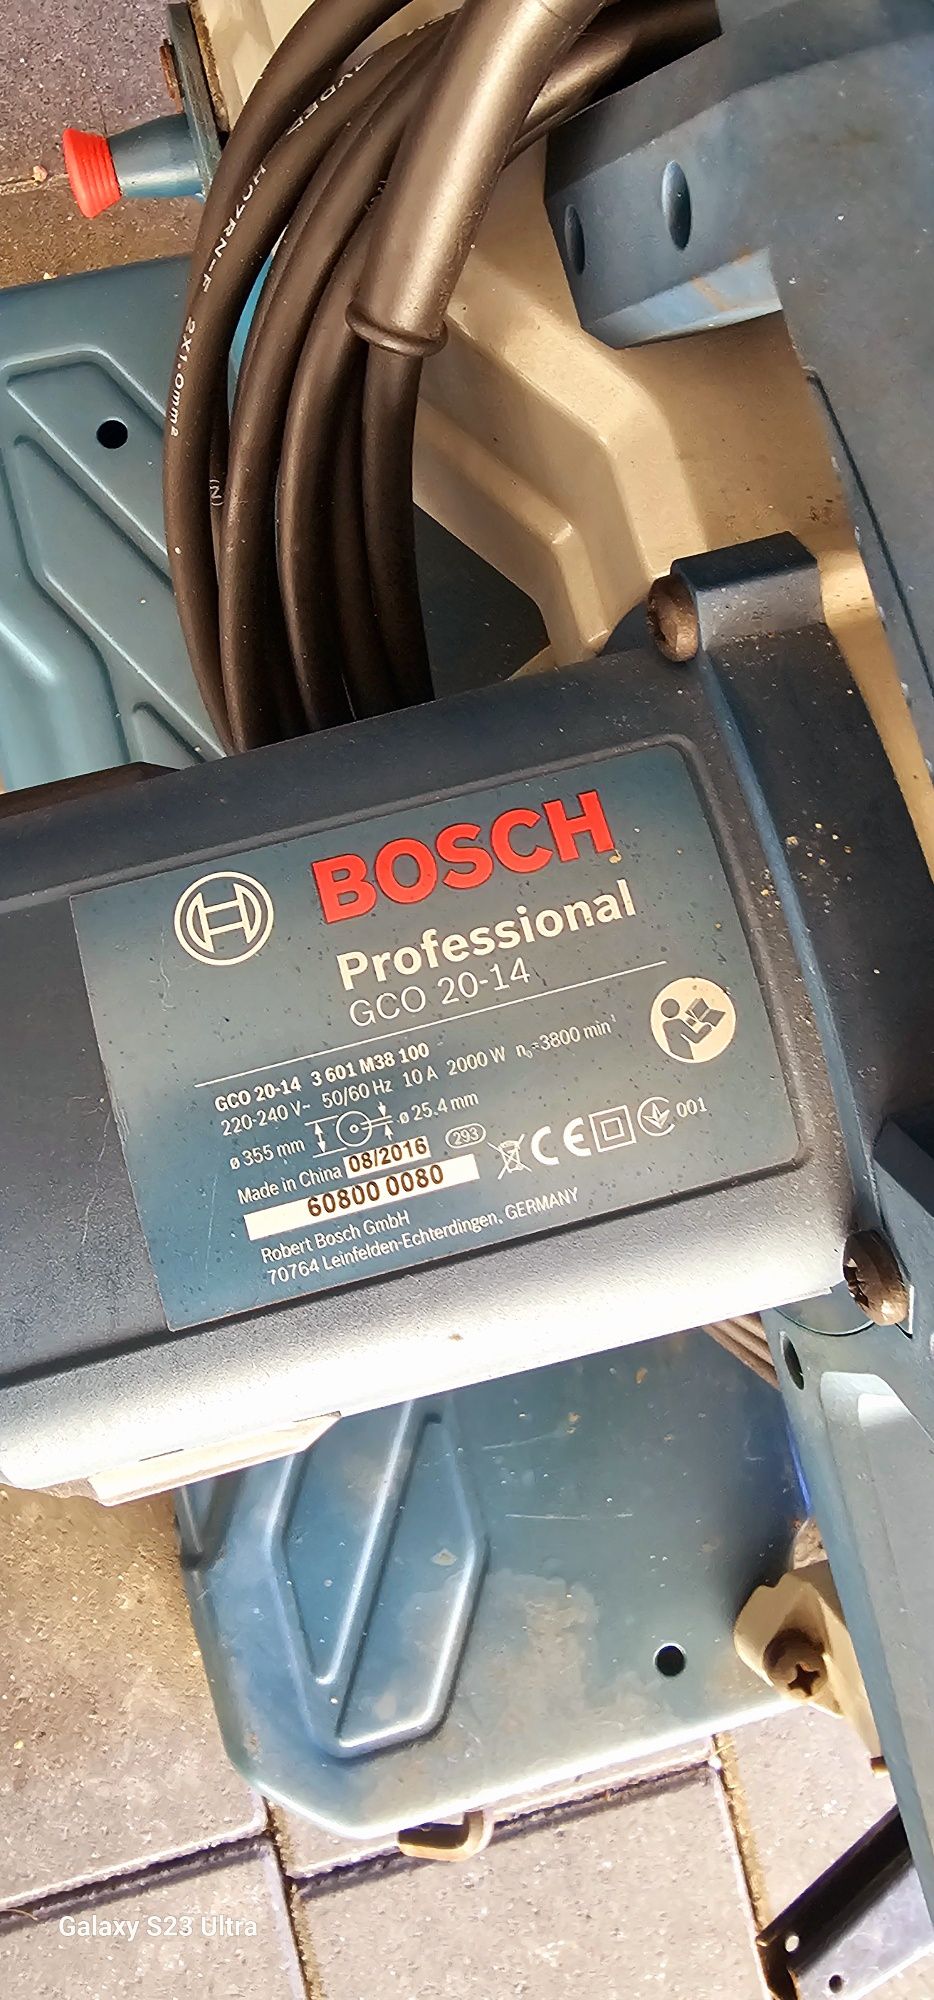 Piła do metalu Bosch Professional GCO 20-14